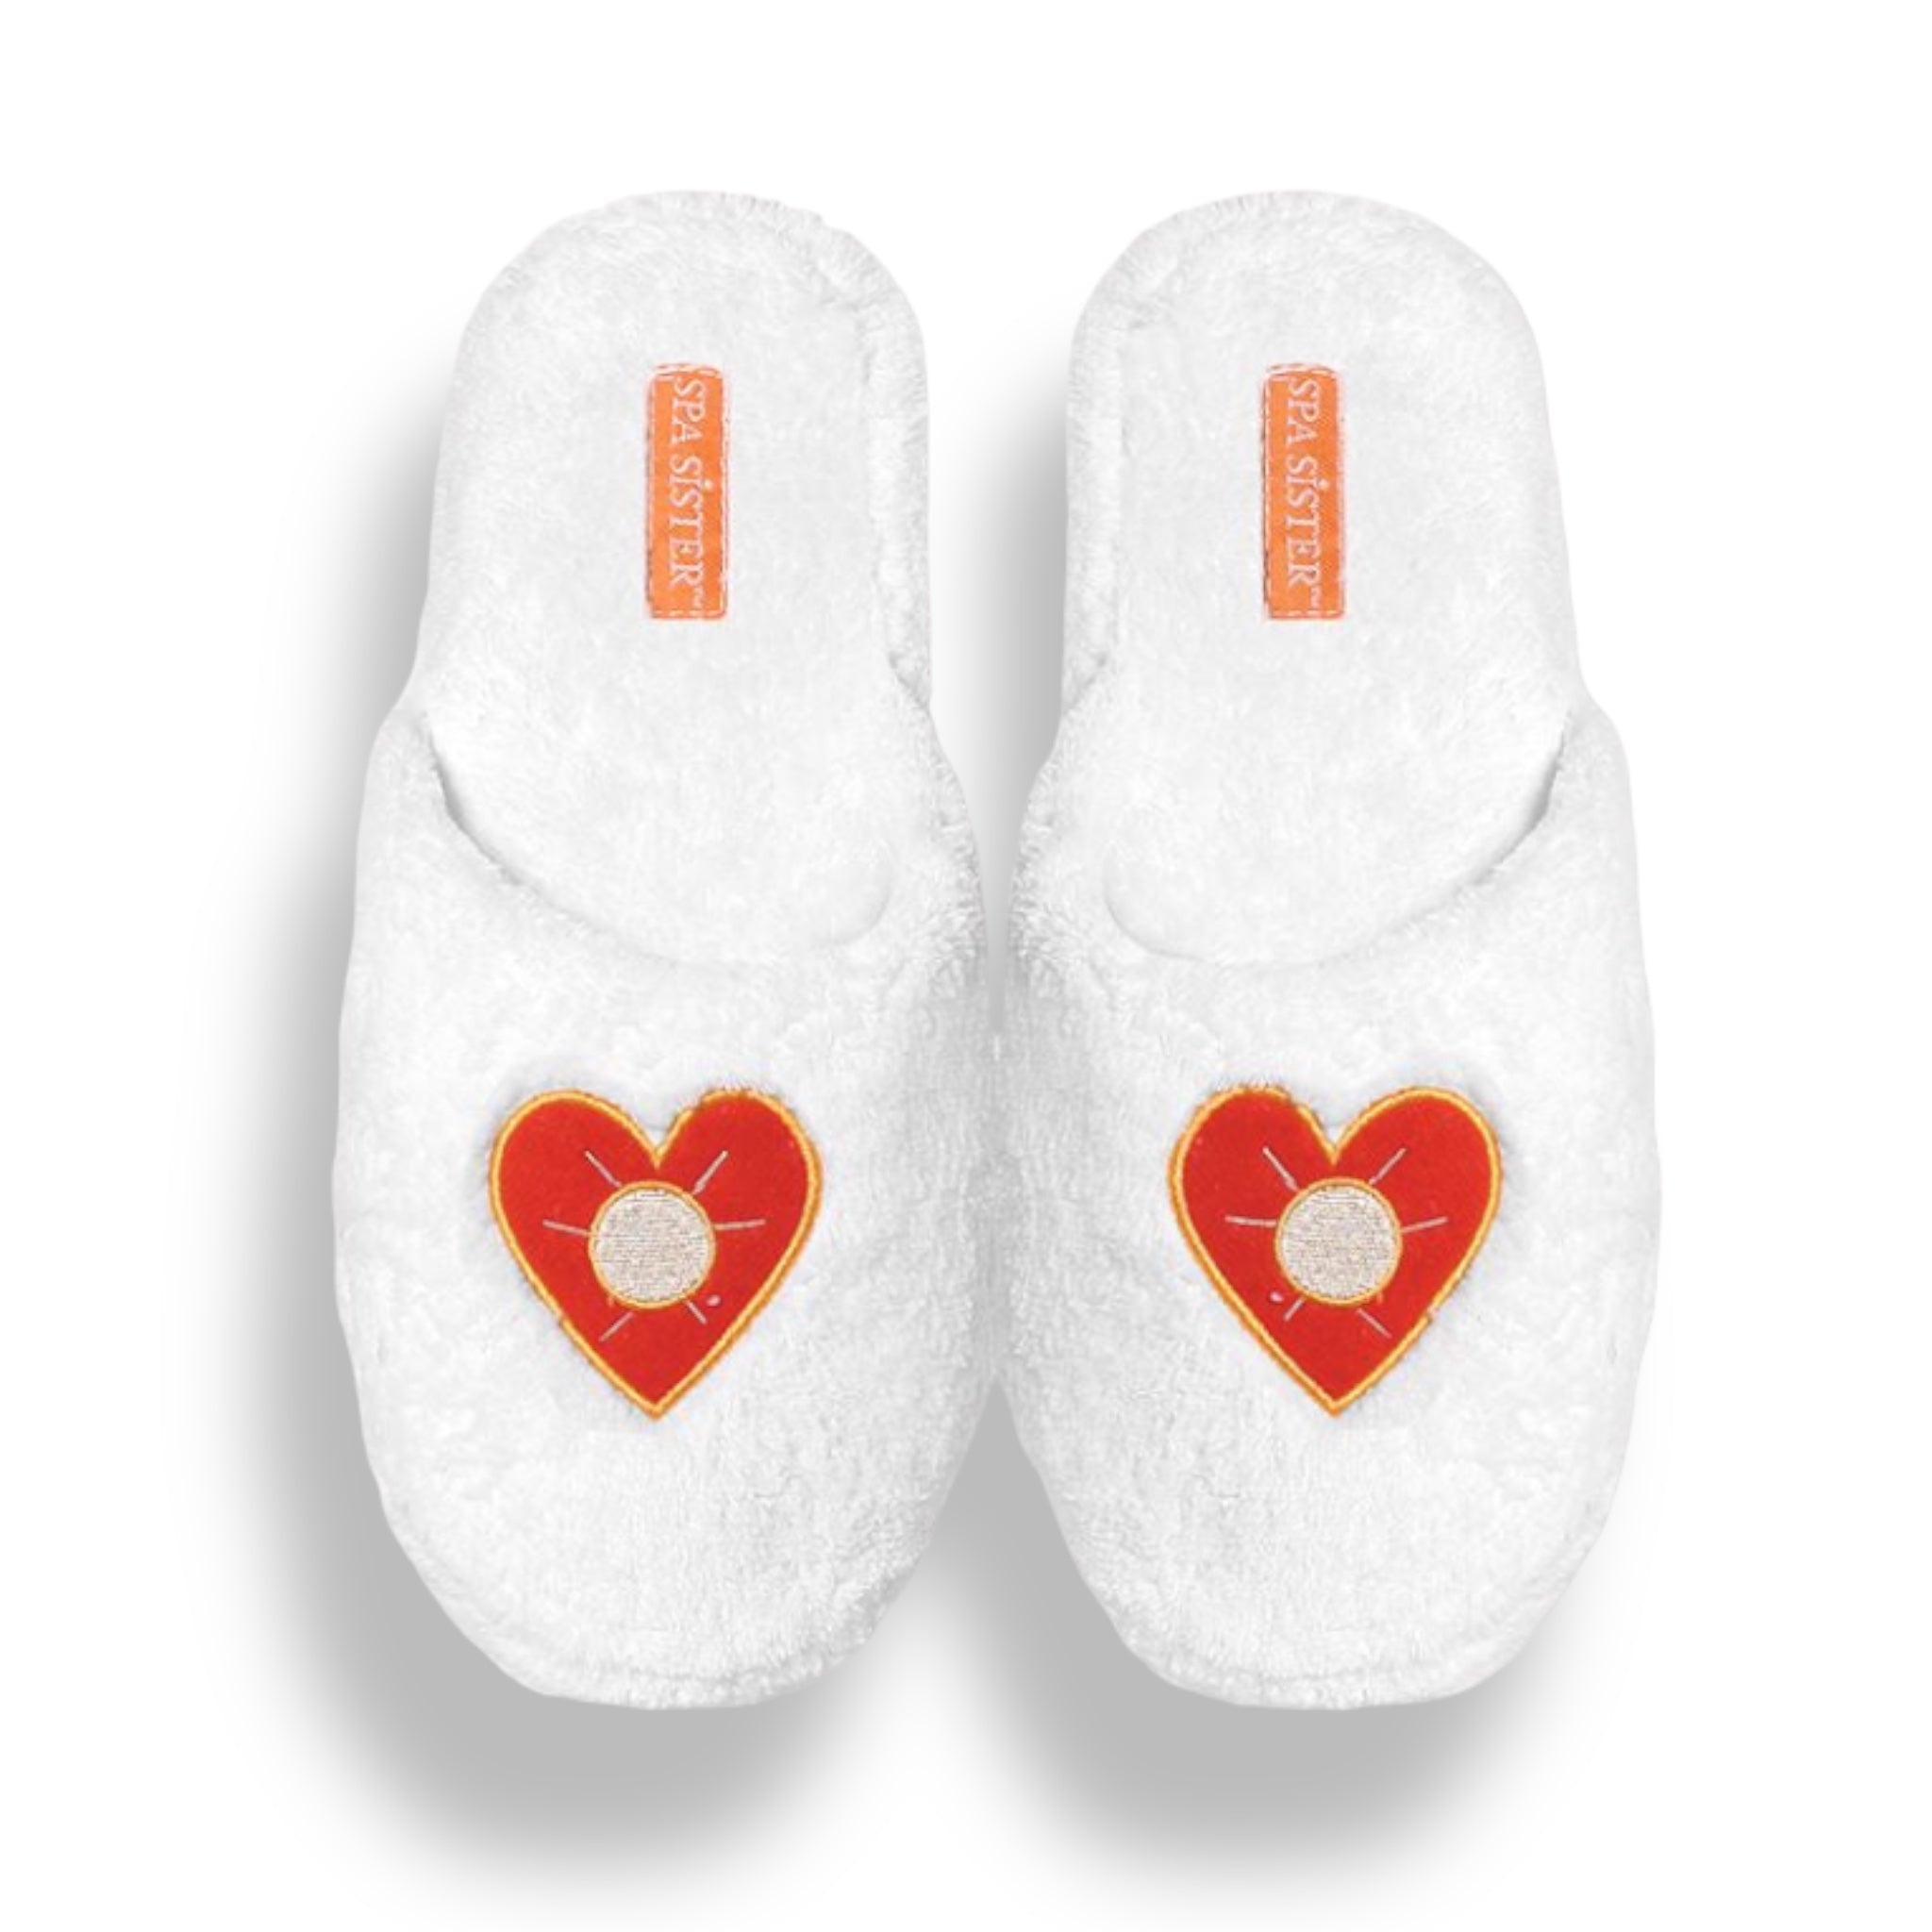 Embroidered Heart Spa Bath Slippers White -MerryBath.com